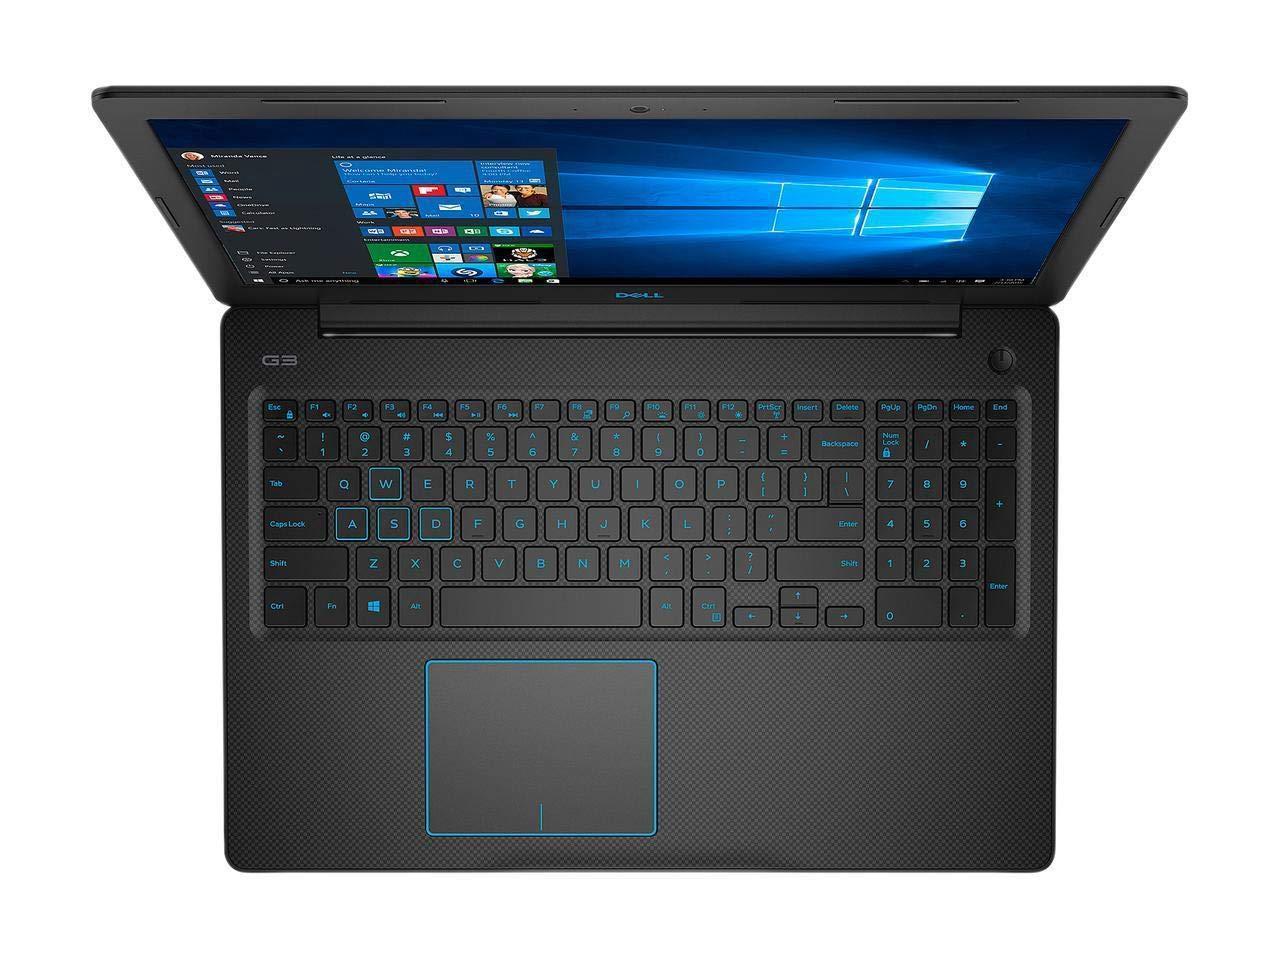 Newest Dell 15.6" FHD IPS High-Performance Gaming Laptop | Intel Core i5-8300H Quad-Core| 16GB DDR4 RAM |256GB M.2 SSD+1TB HDD |NVIDIA GeForce GTX 1050Ti 4GB |Backlit Keyboard | MaxxAudio|Windows 10